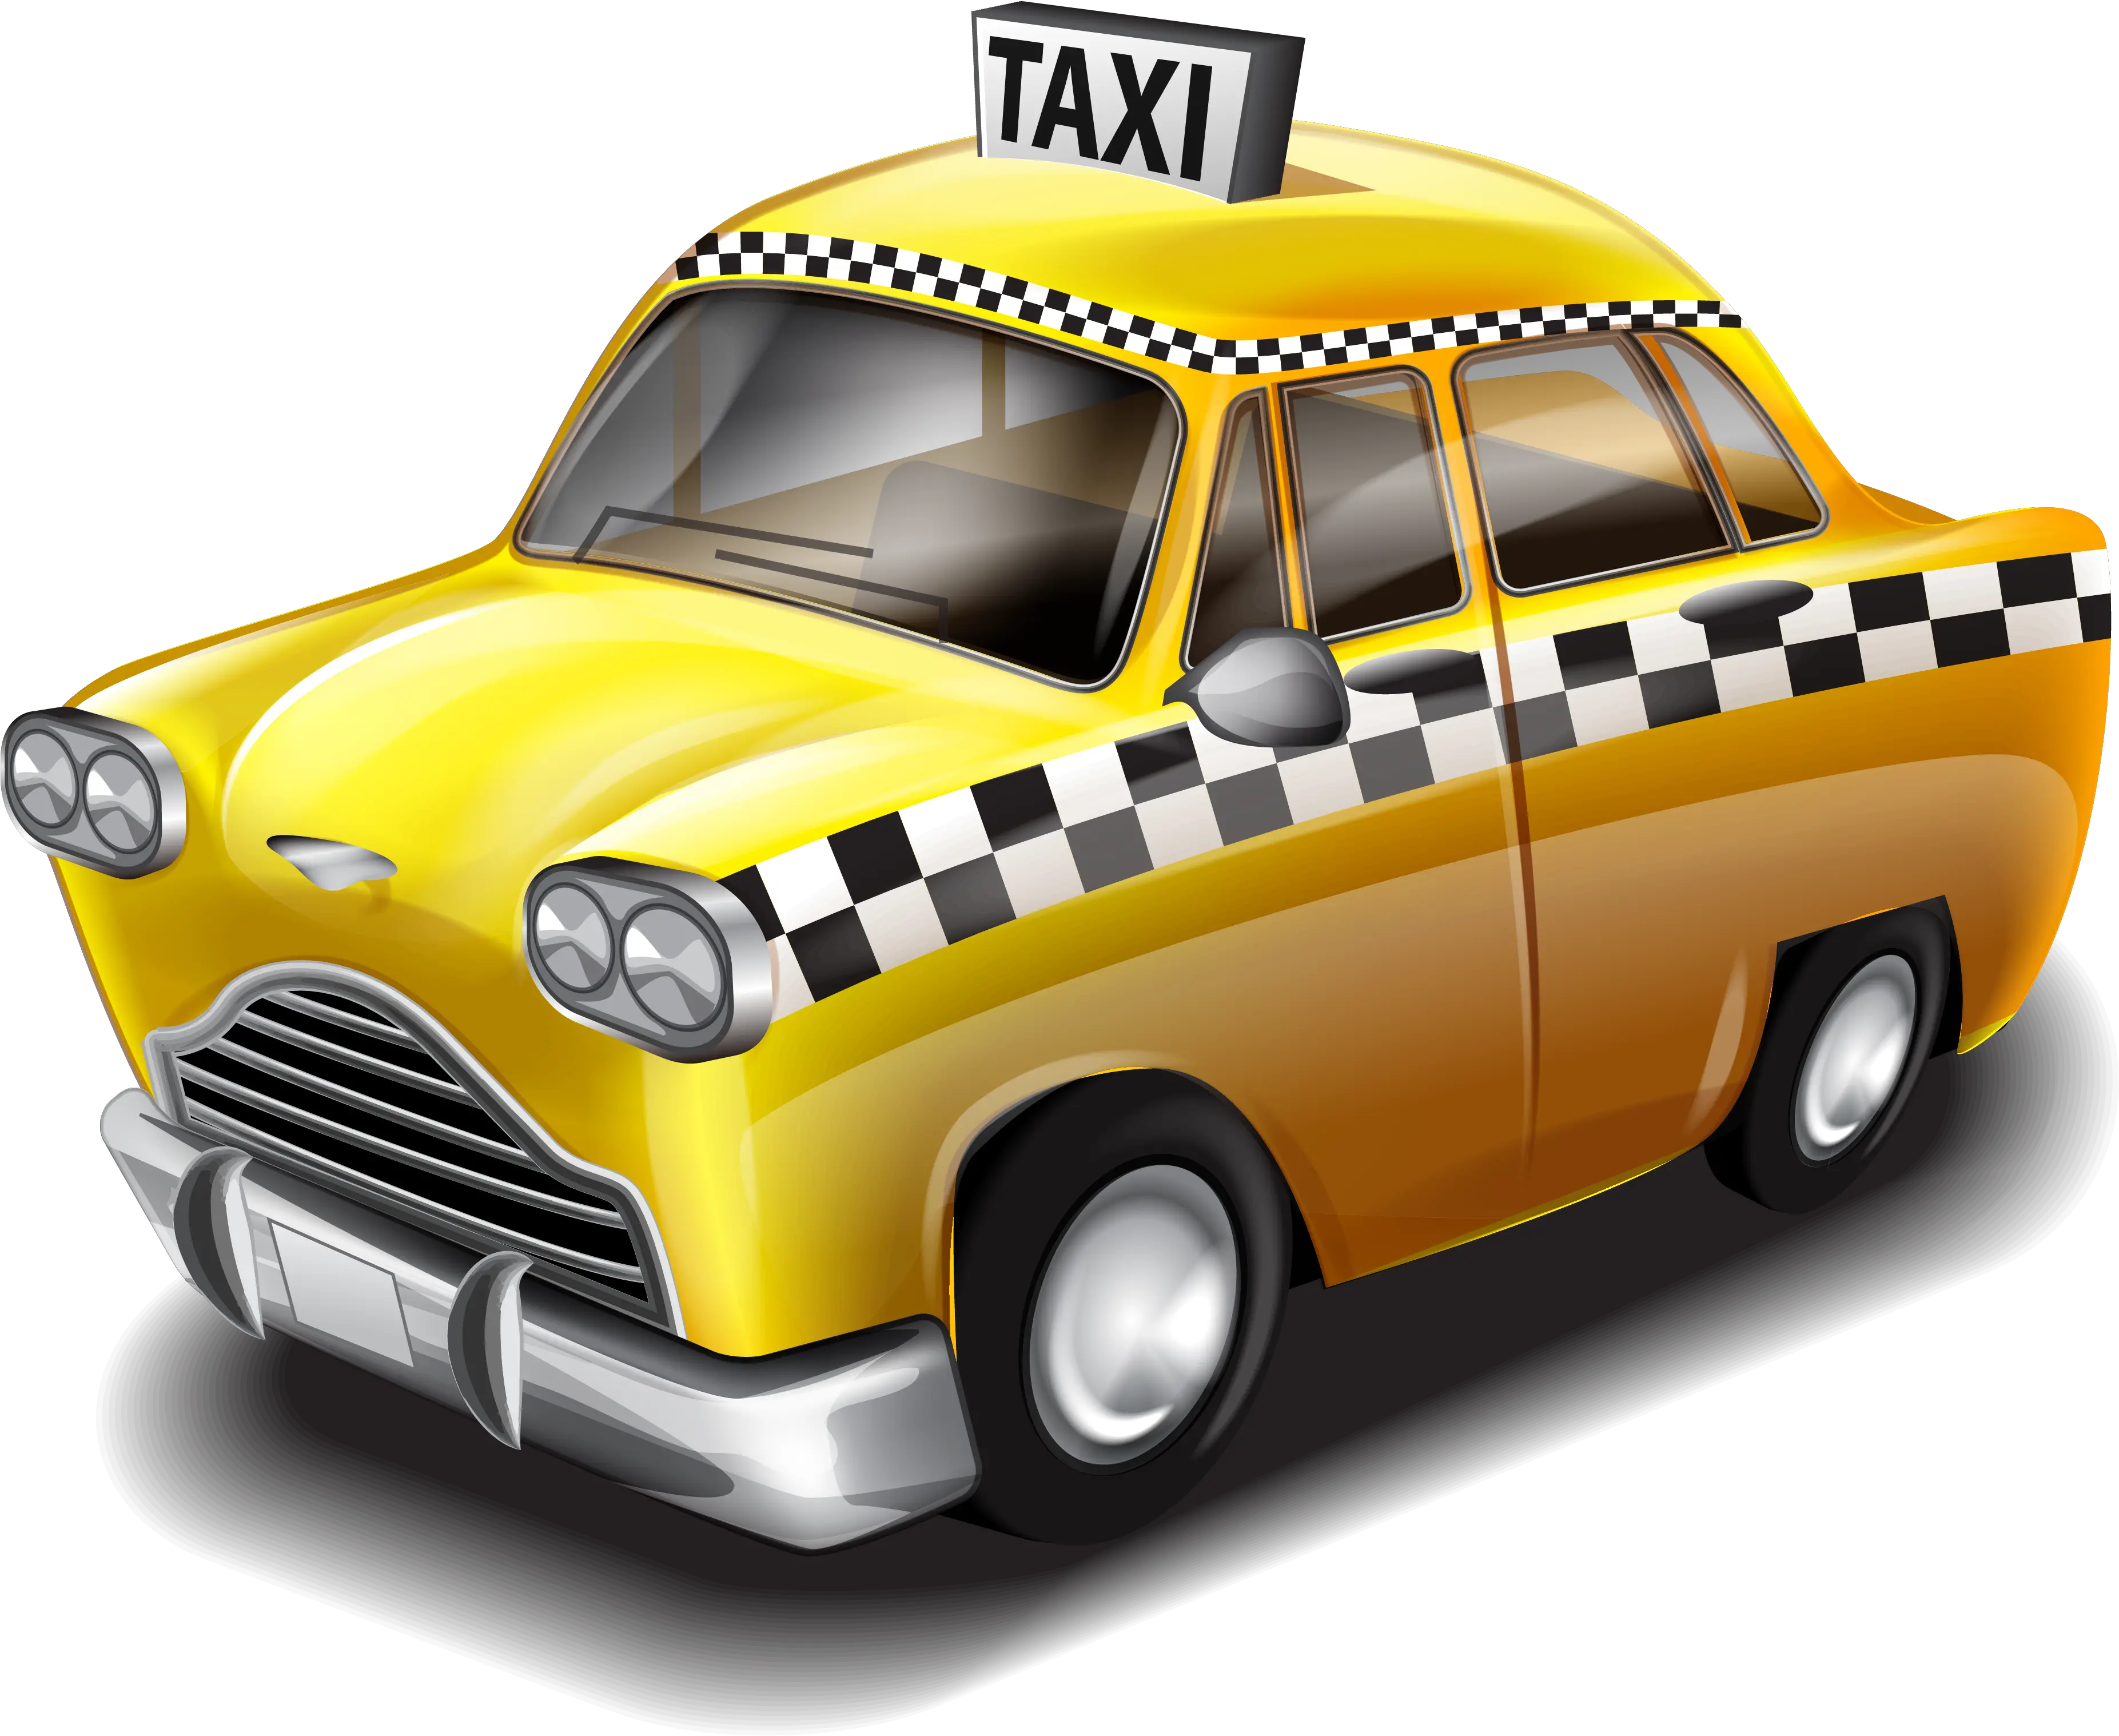 Taxi Png Images Cab Yellow New York Taxi Cartoon Taxi Cab Png